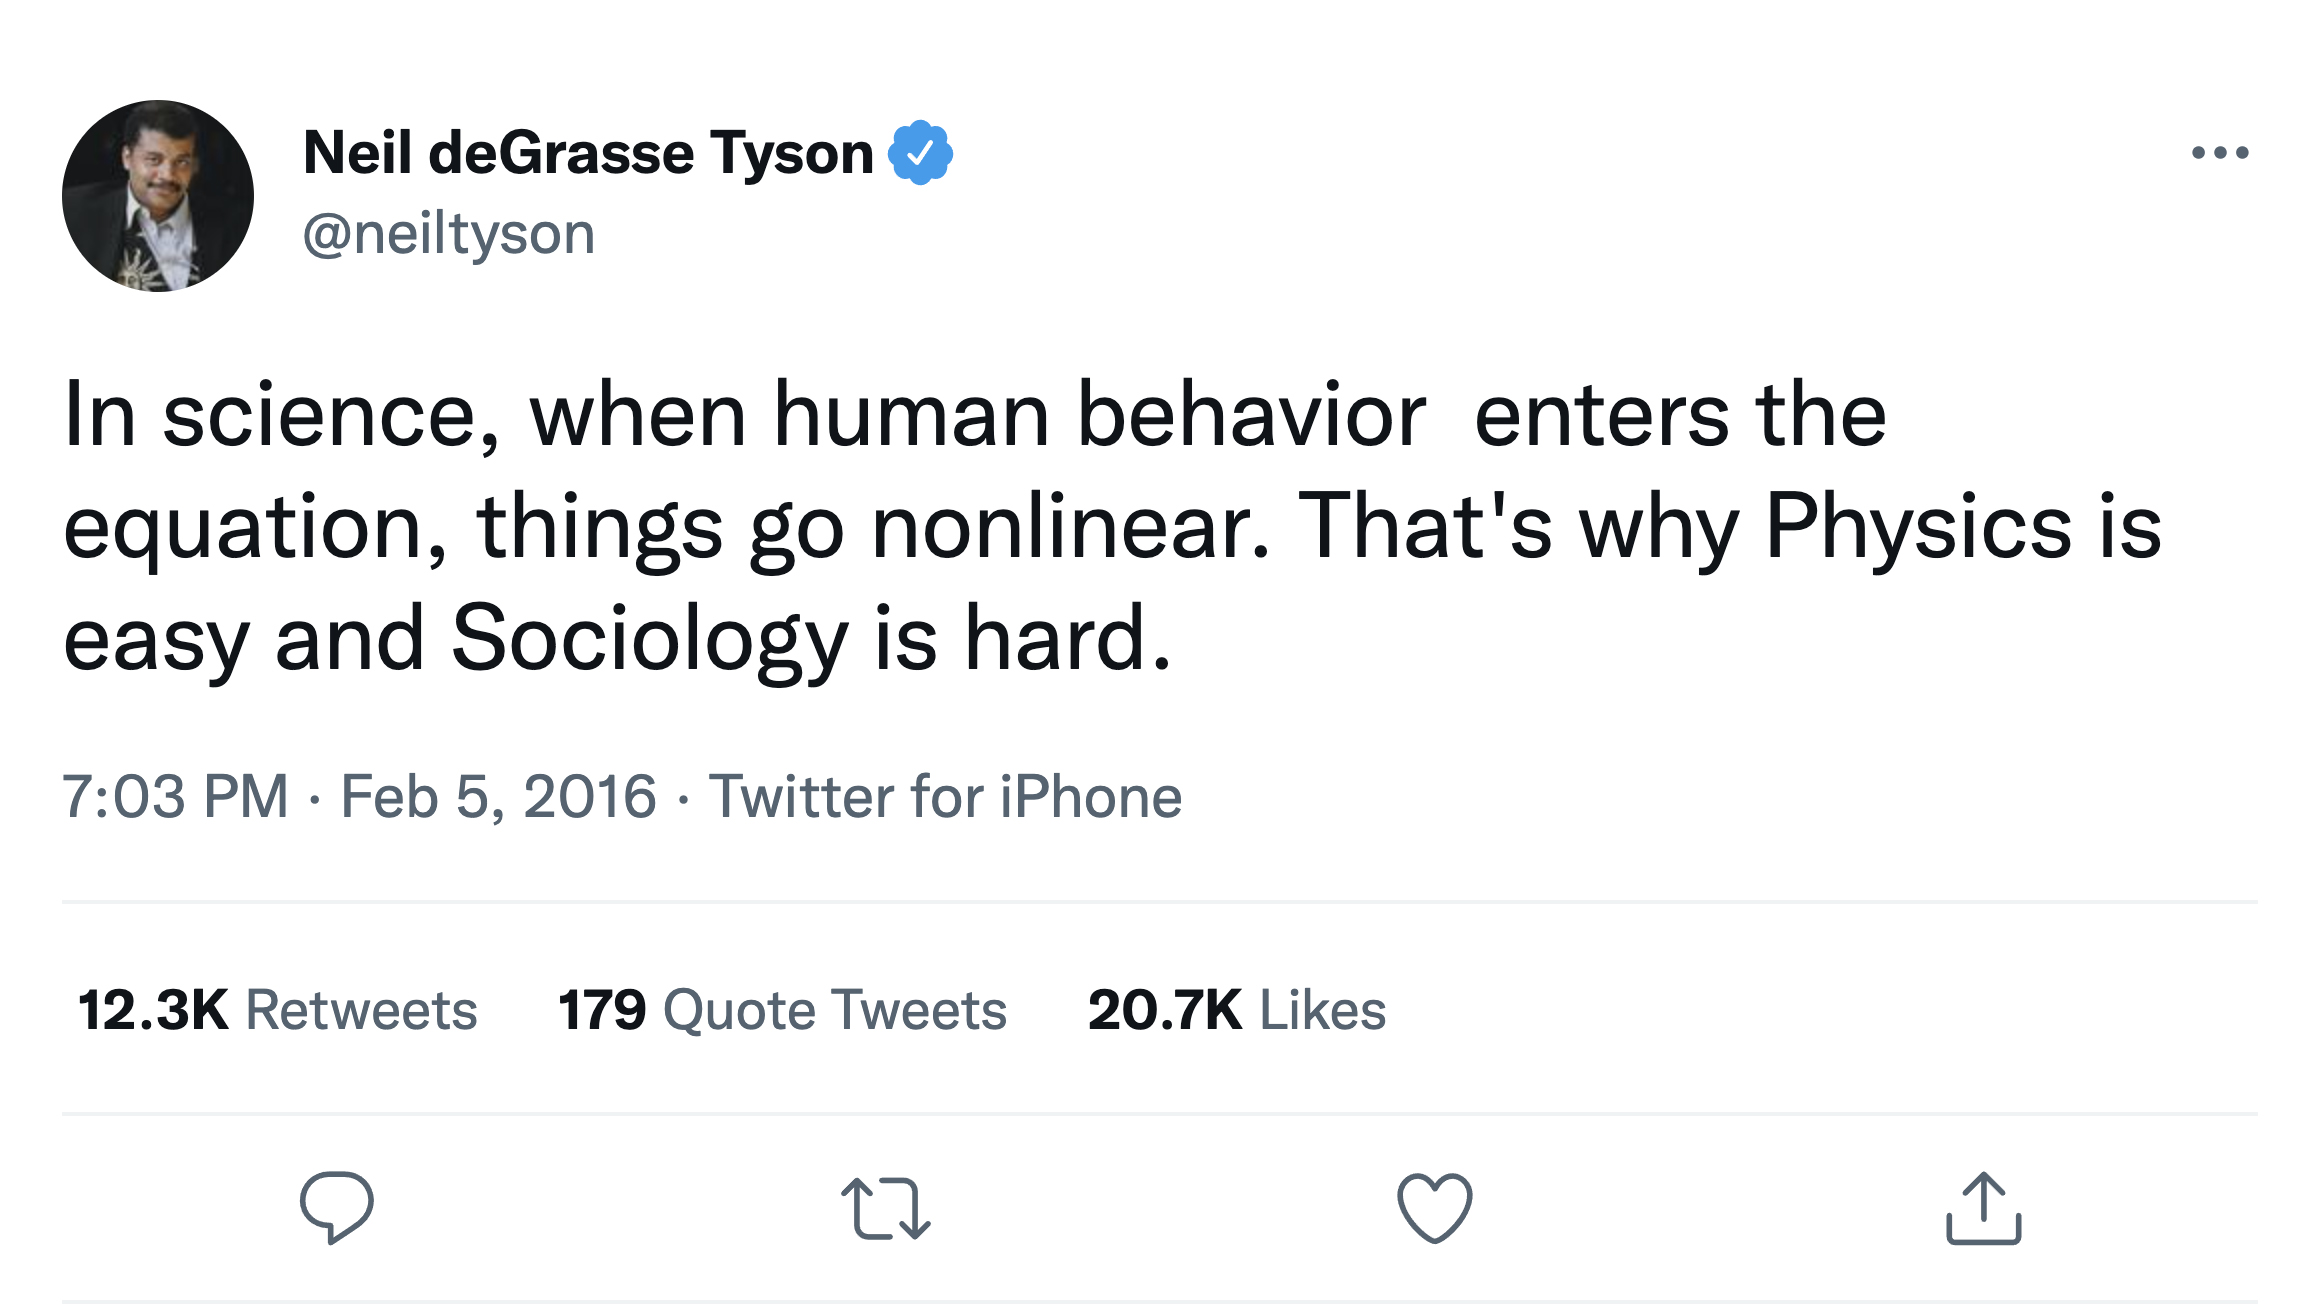 Neil deGrasse Tyson tweet on why "Sociology is hard"